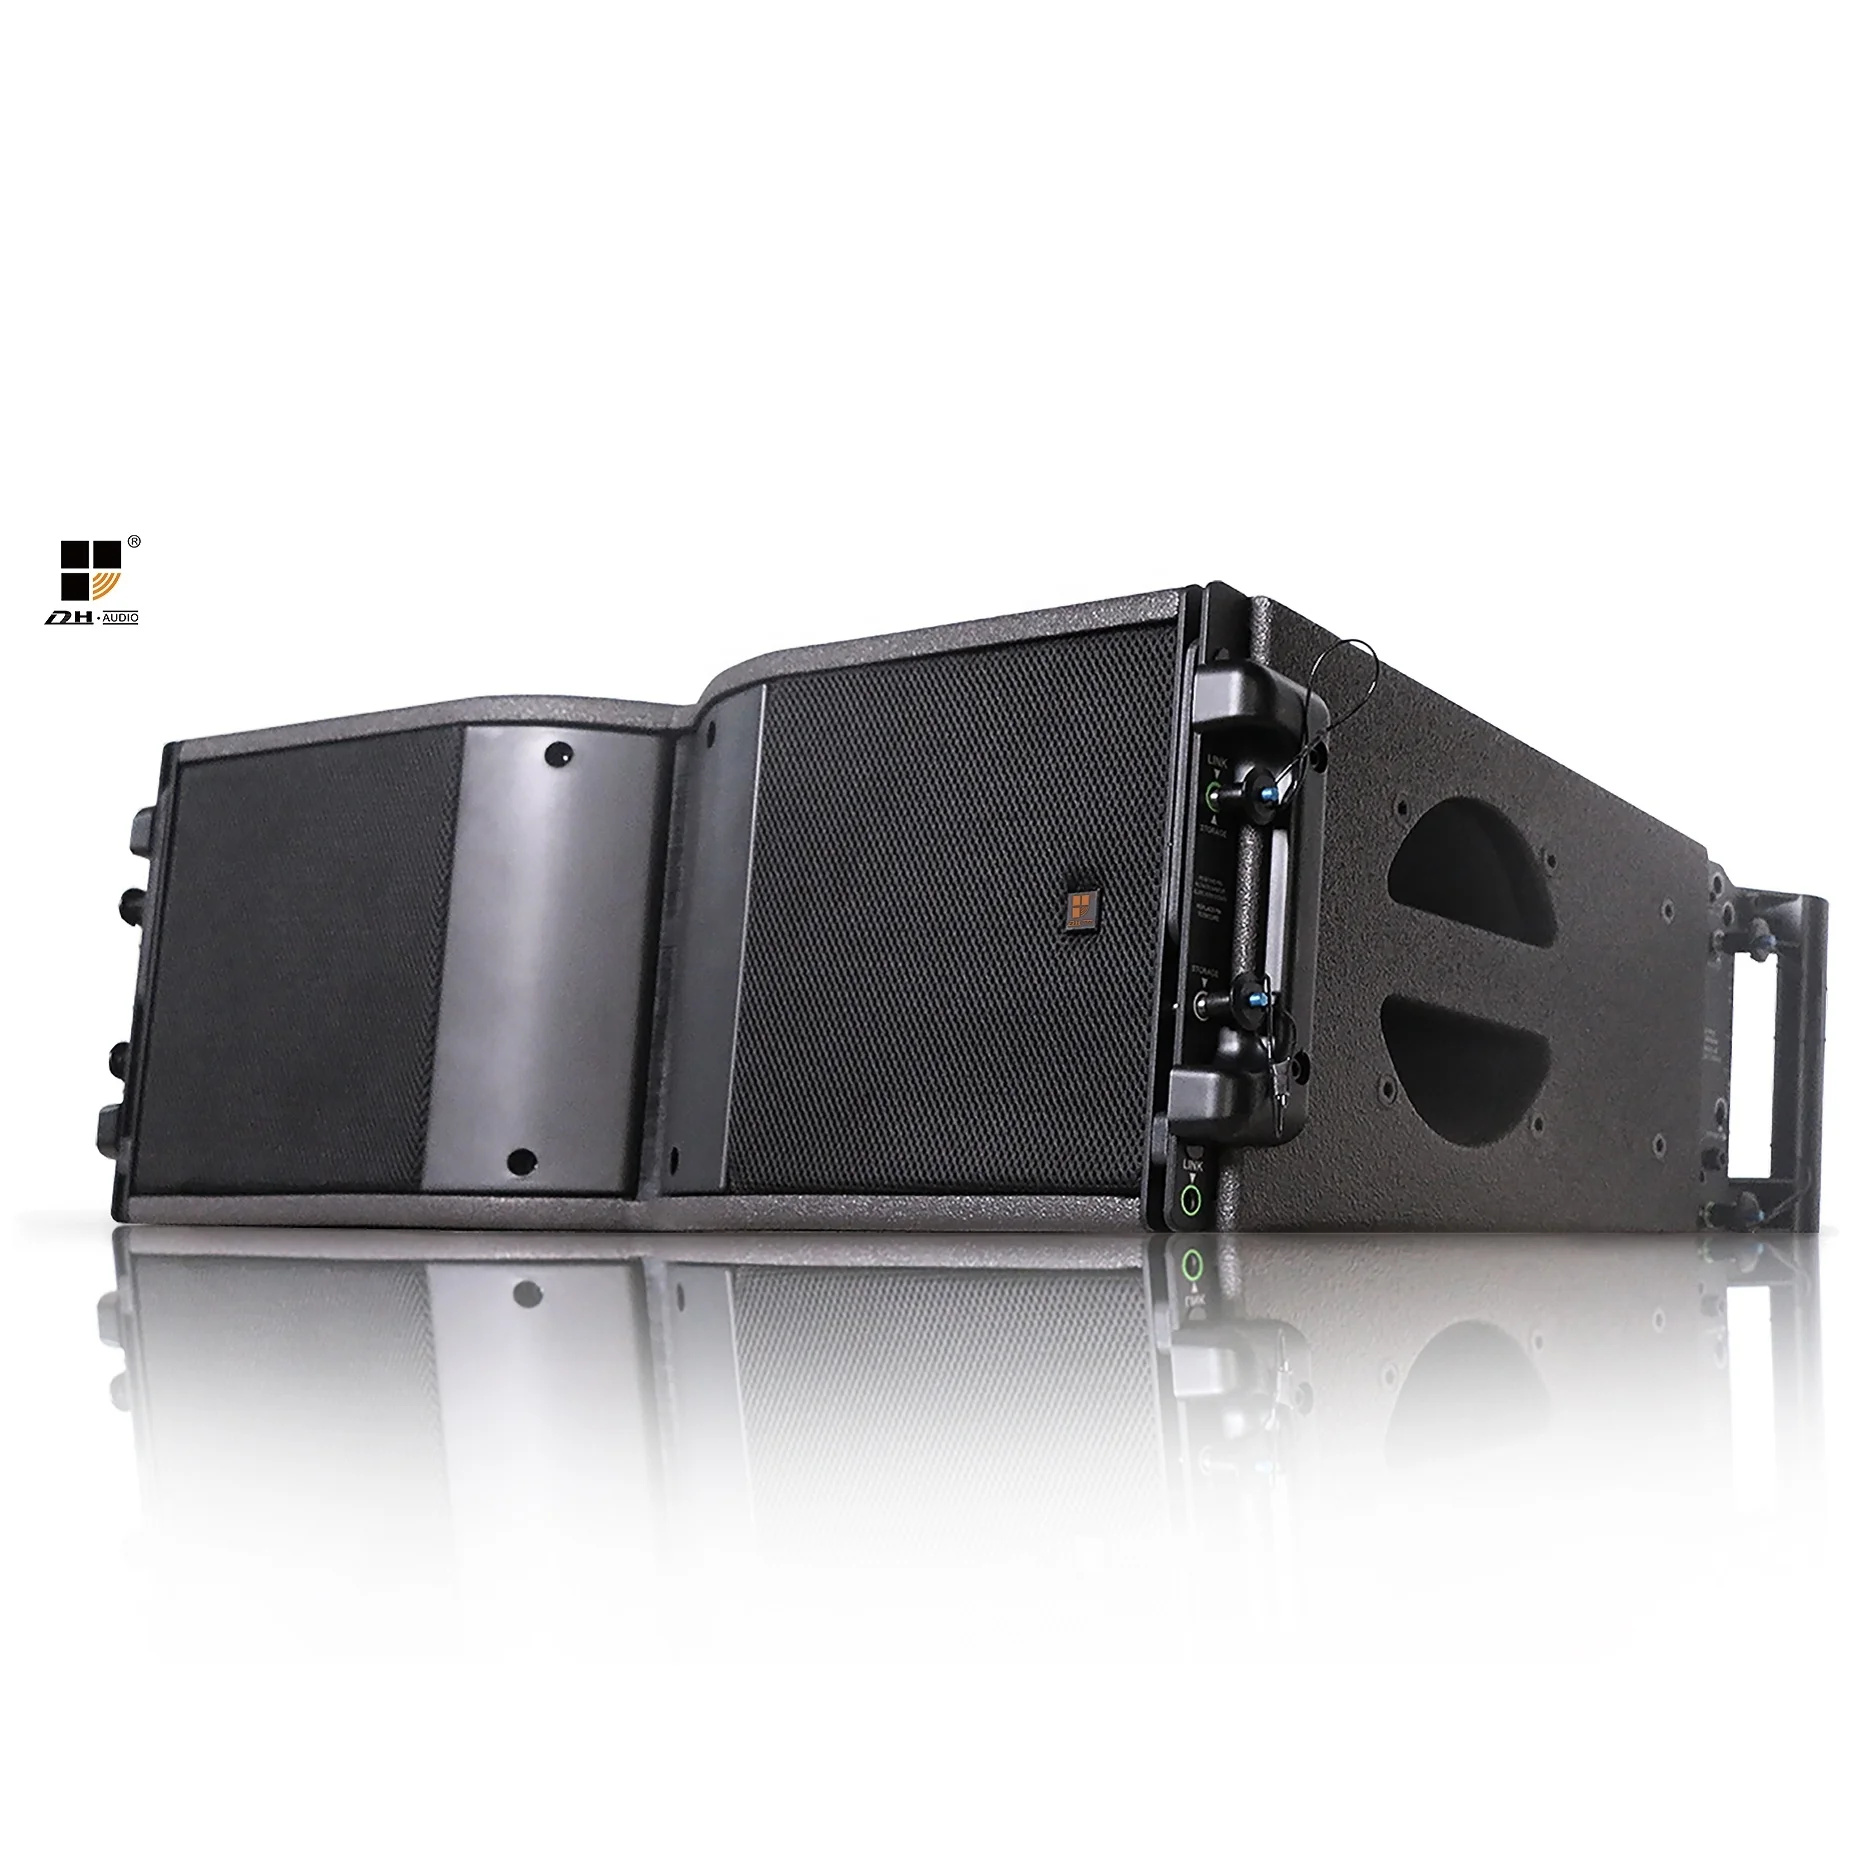 concert speakers system